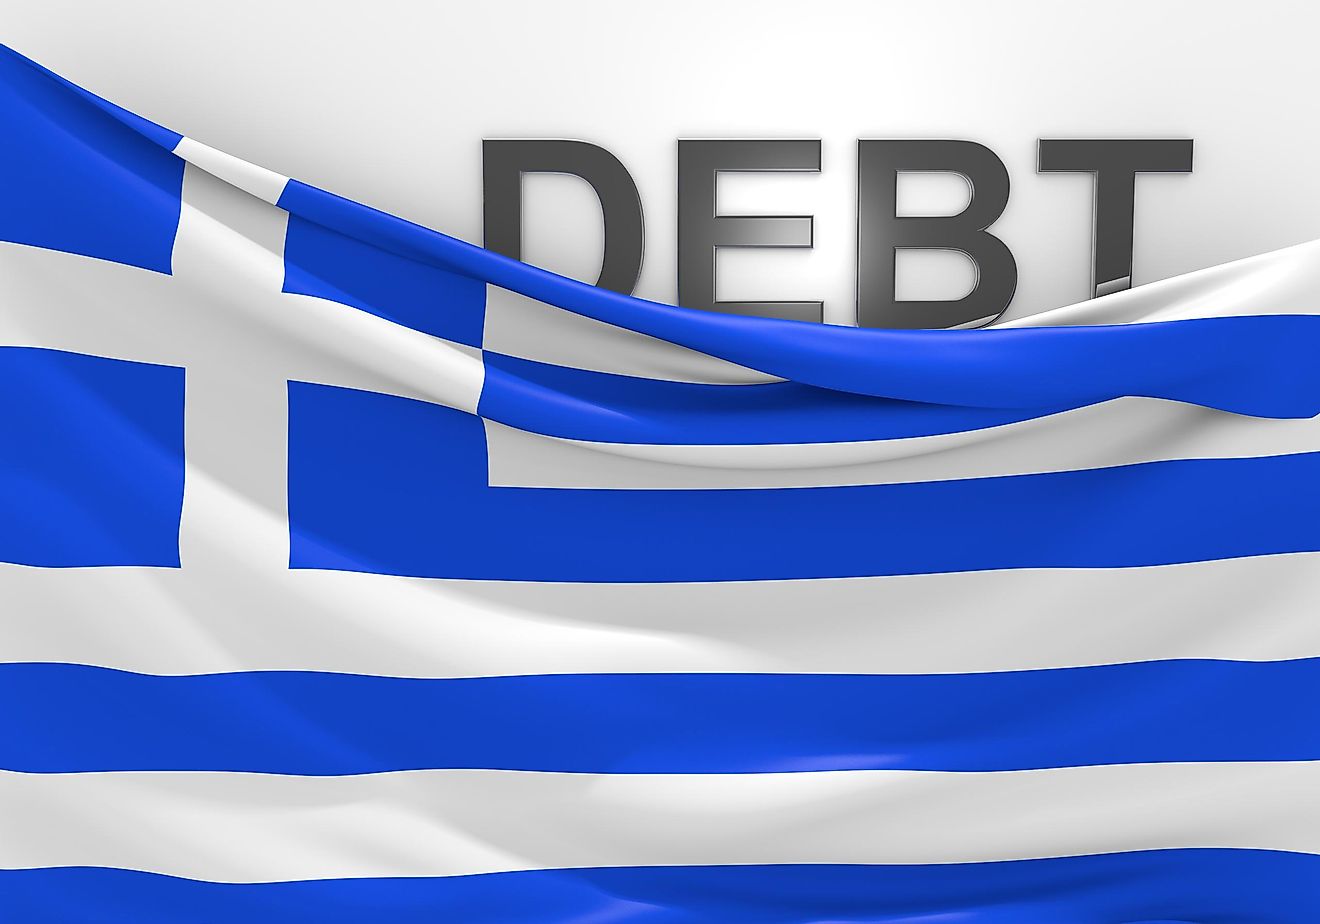 The Greek flag. Image credit: Greekboston.com